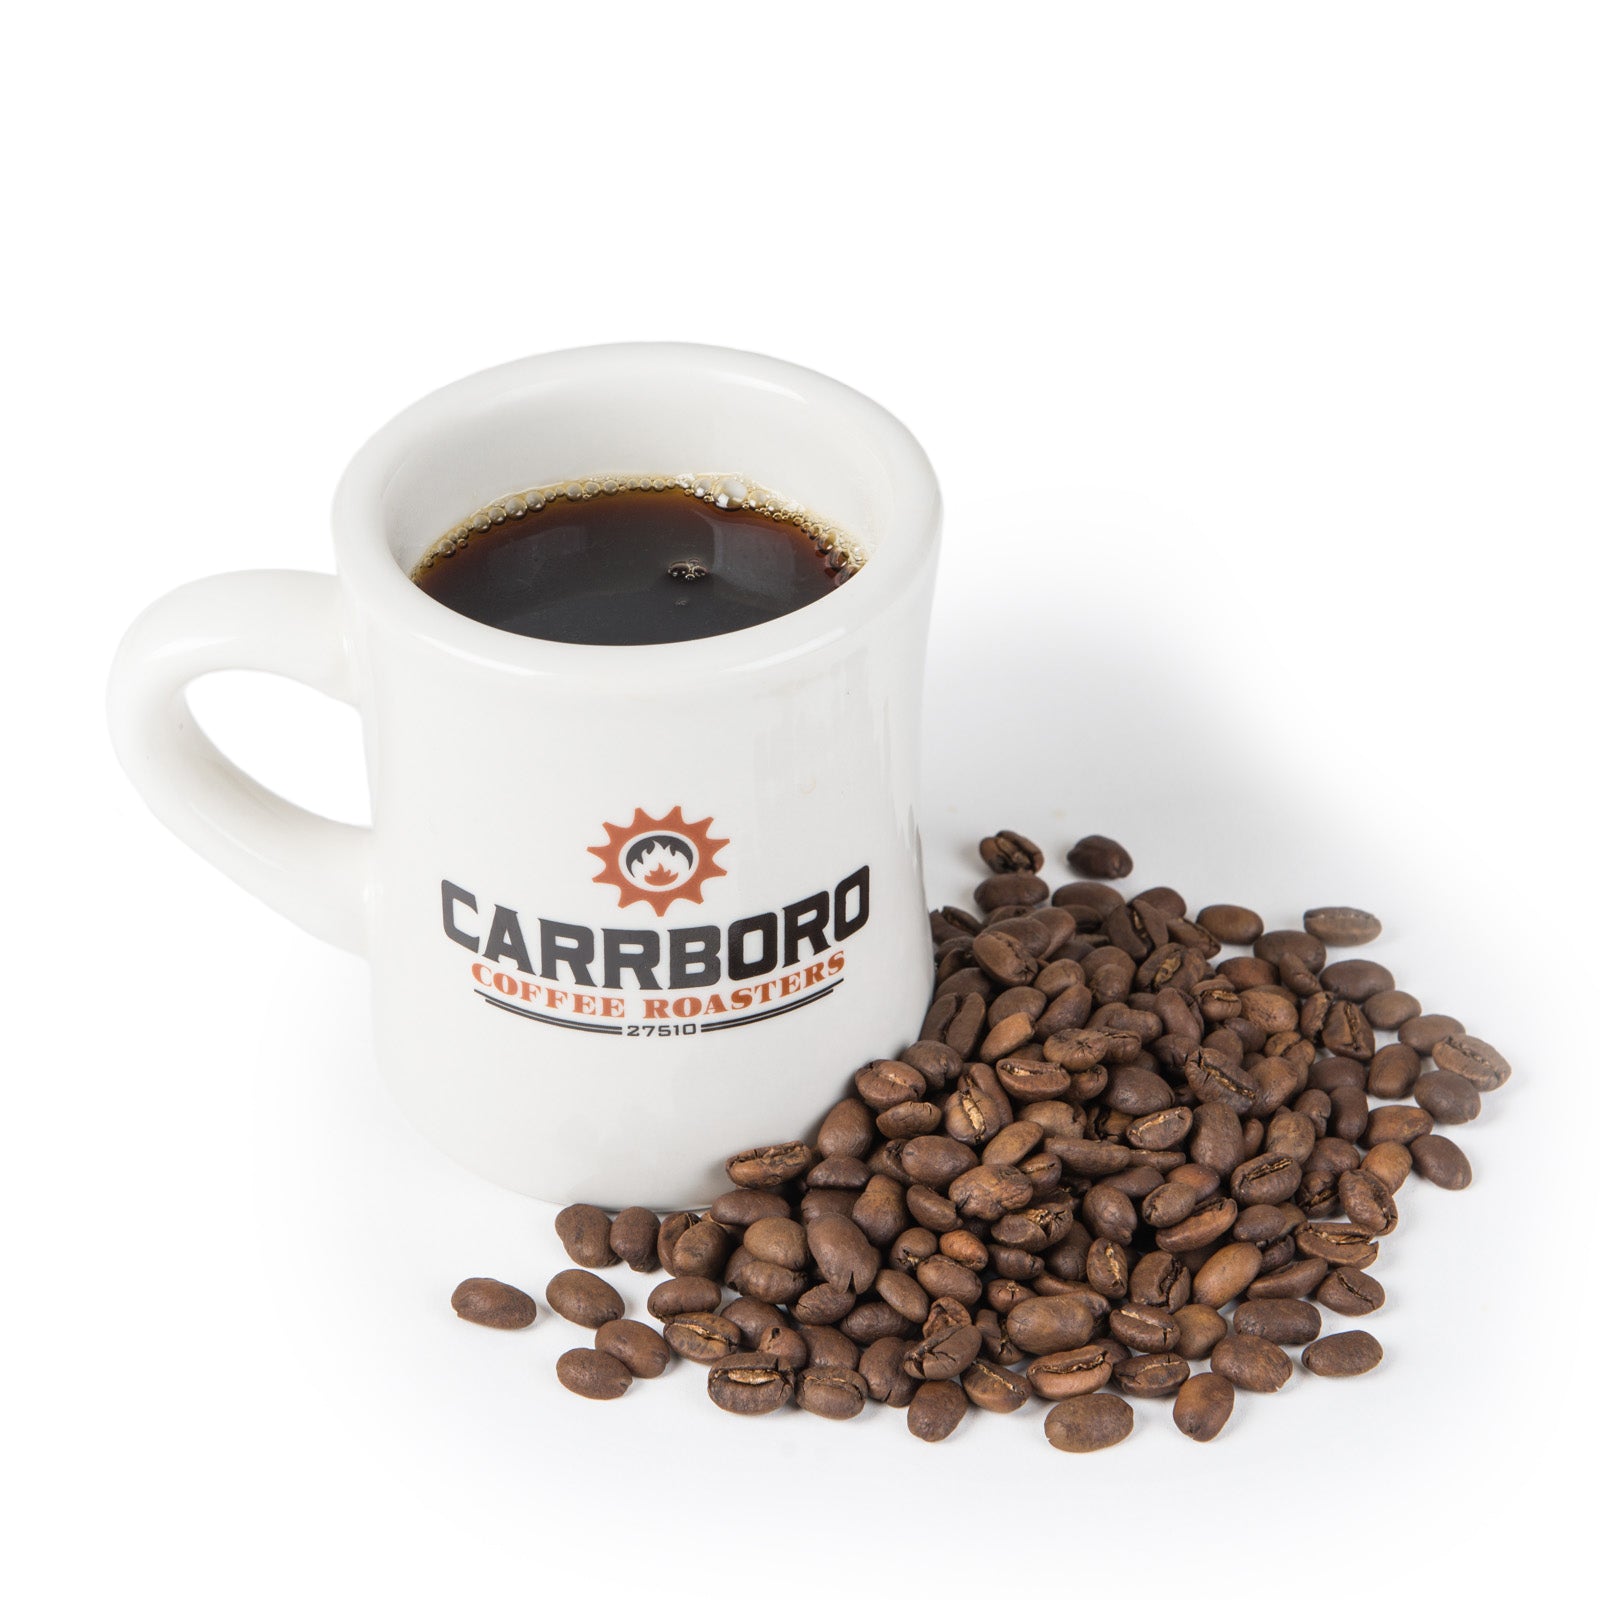 Carrboro Coffee Roasters Coffee Mug